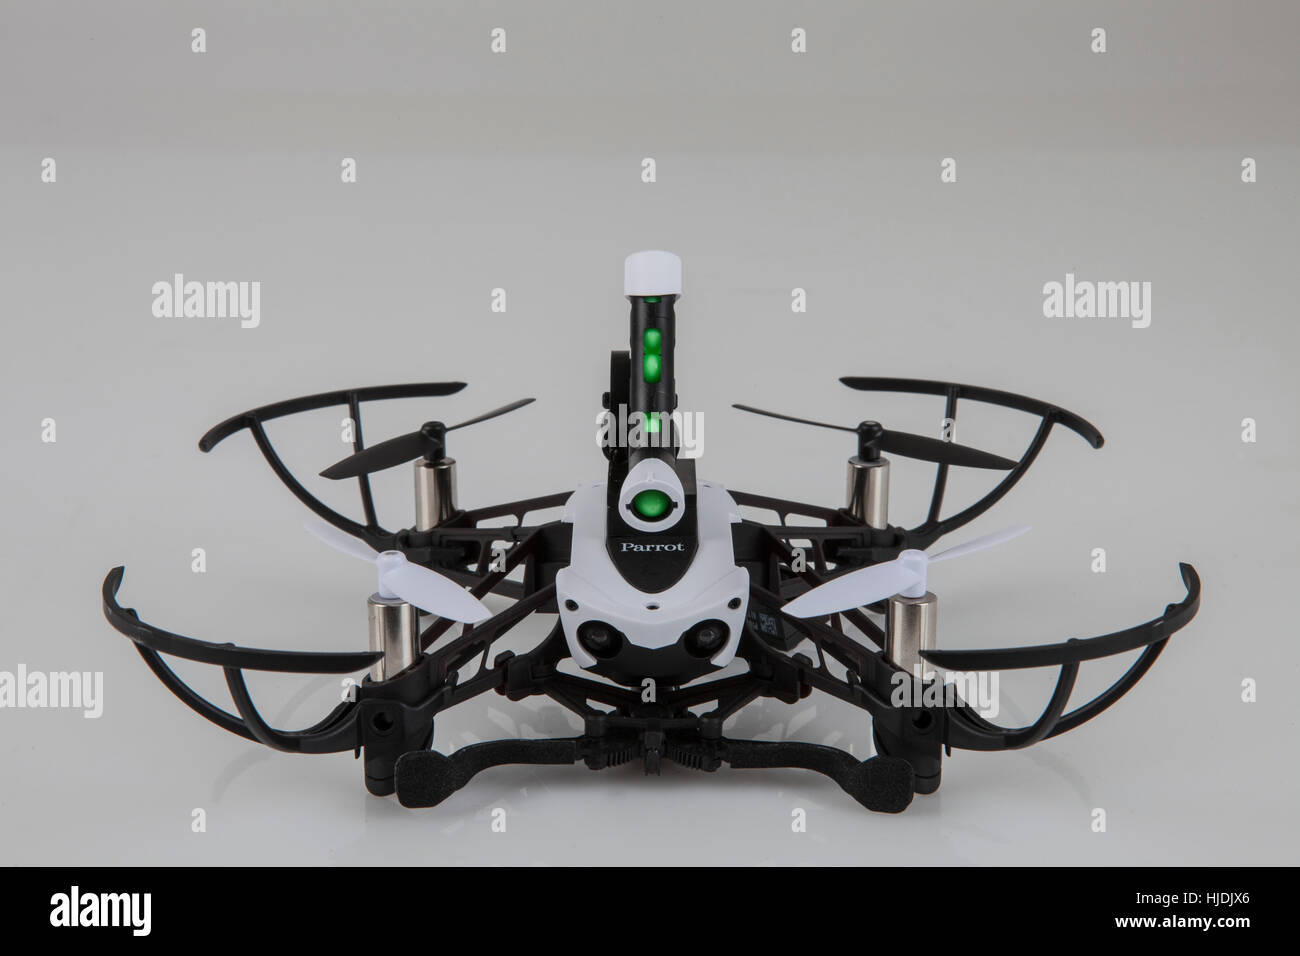 Mambo drone Stock Photo - Alamy